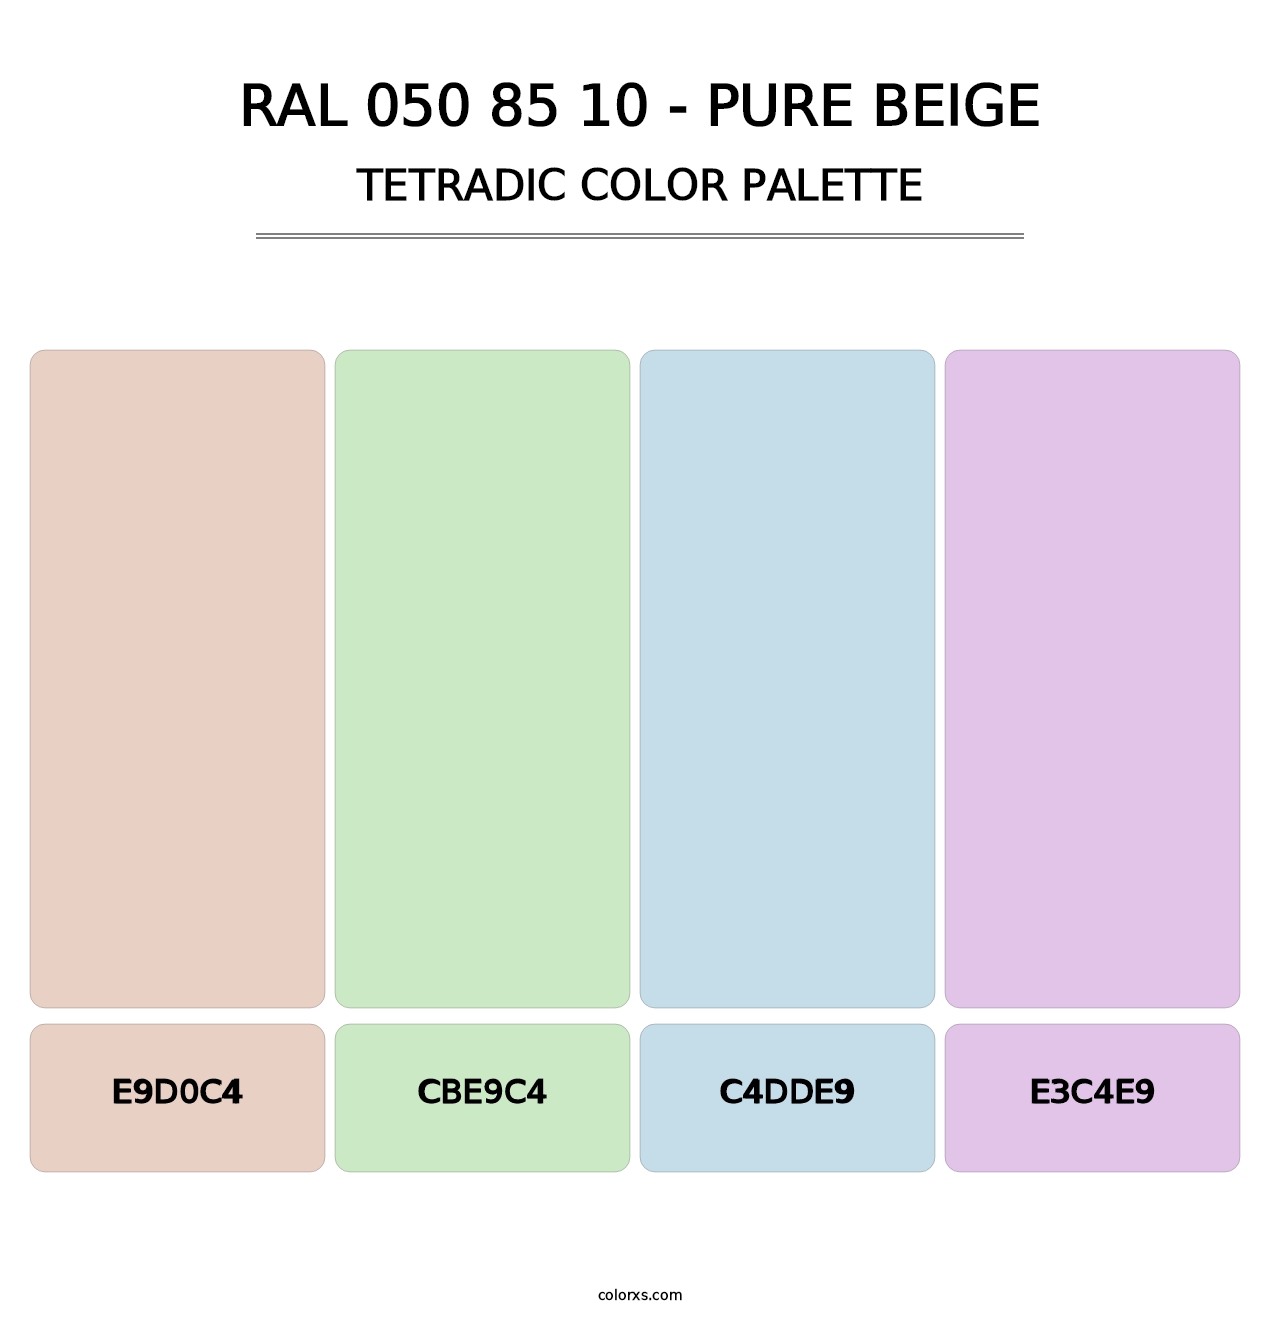 RAL 050 85 10 - Pure Beige - Tetradic Color Palette